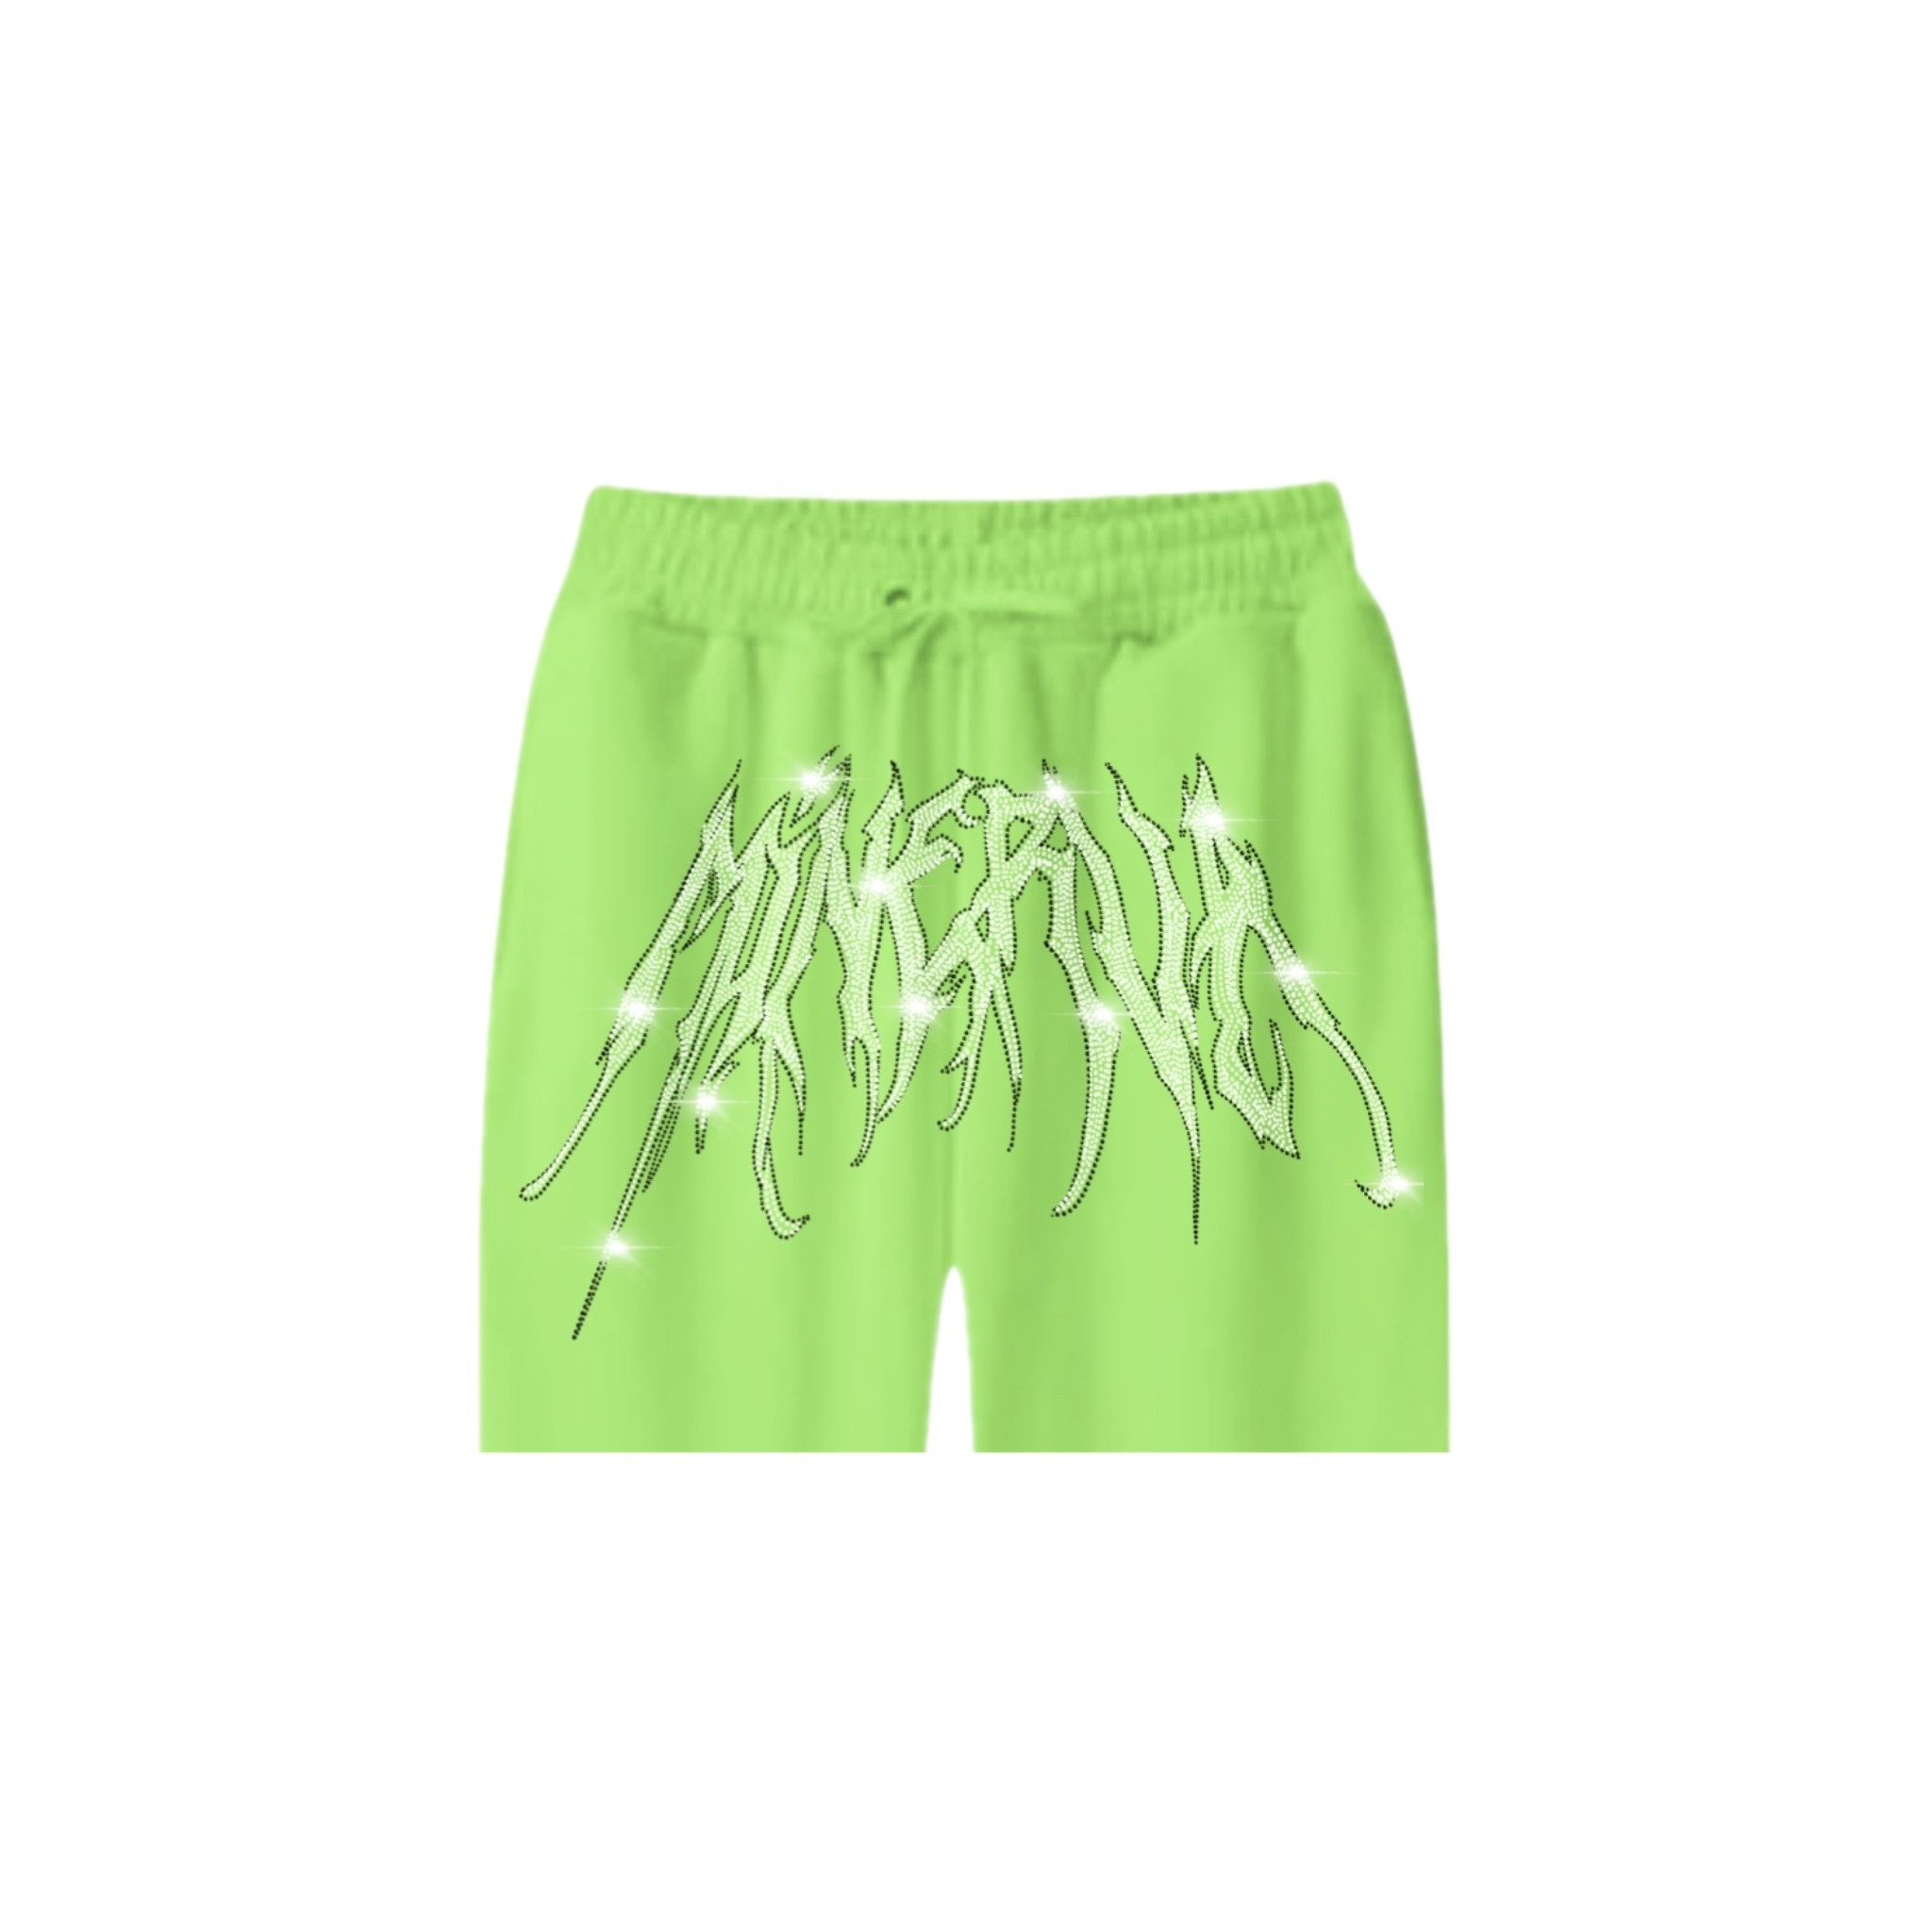 MINERVA rhinestone printed lime shorts